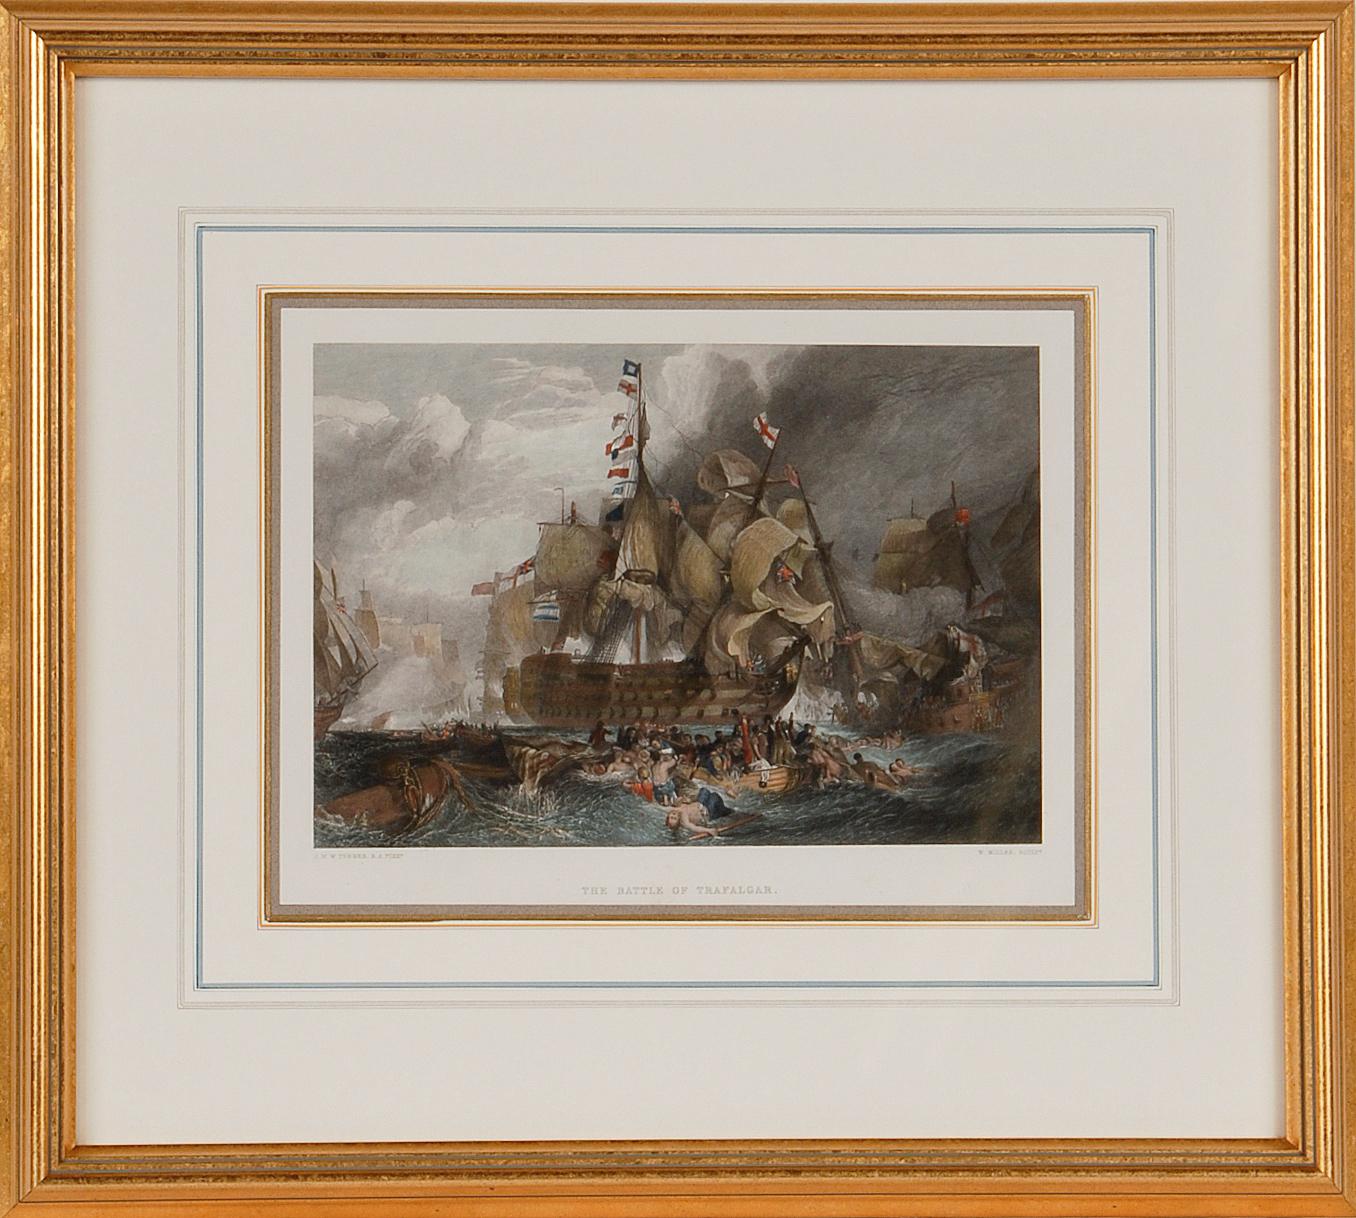 J.M.W. Turner Print - The Battle of Trafalgar: A Framed 19th C. Engraving After J. M. W. Turner